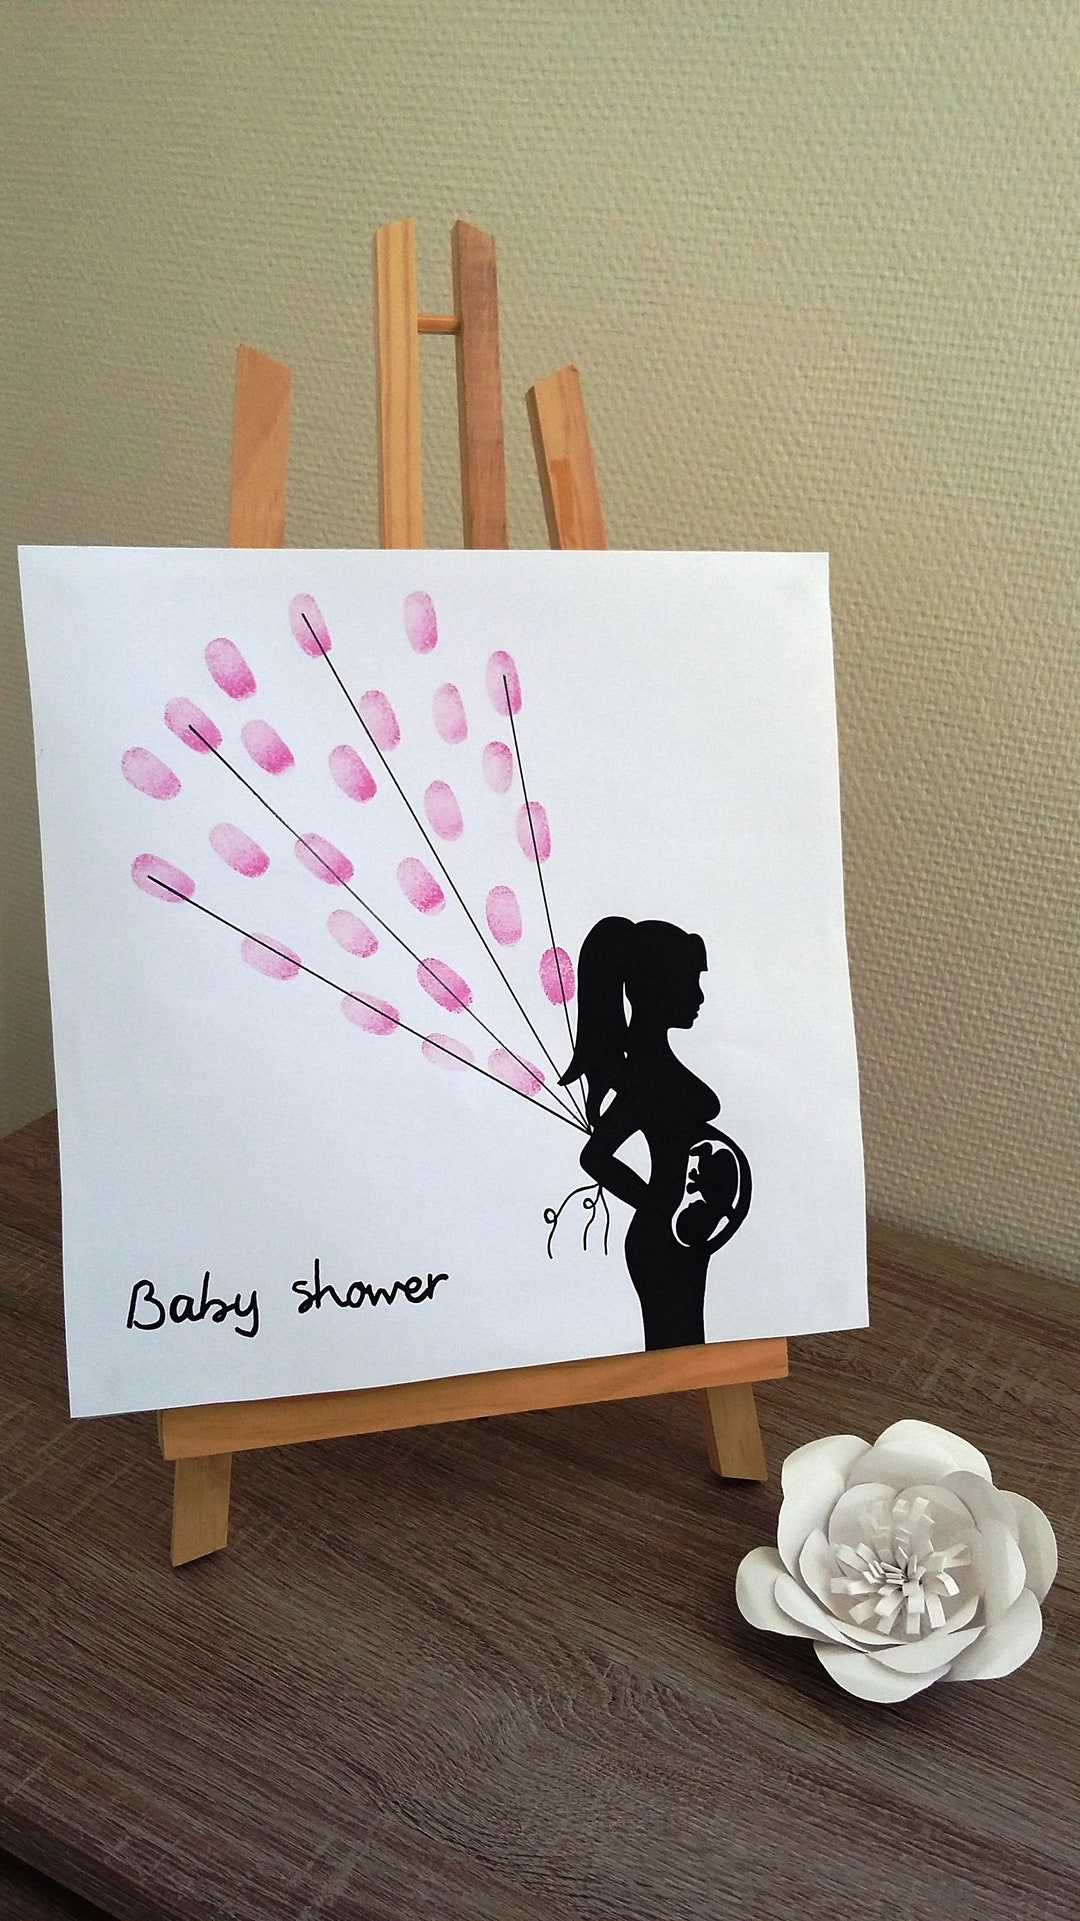 Marco del mensaje - Baby shower naissance - 42 x 30 x 2 cm